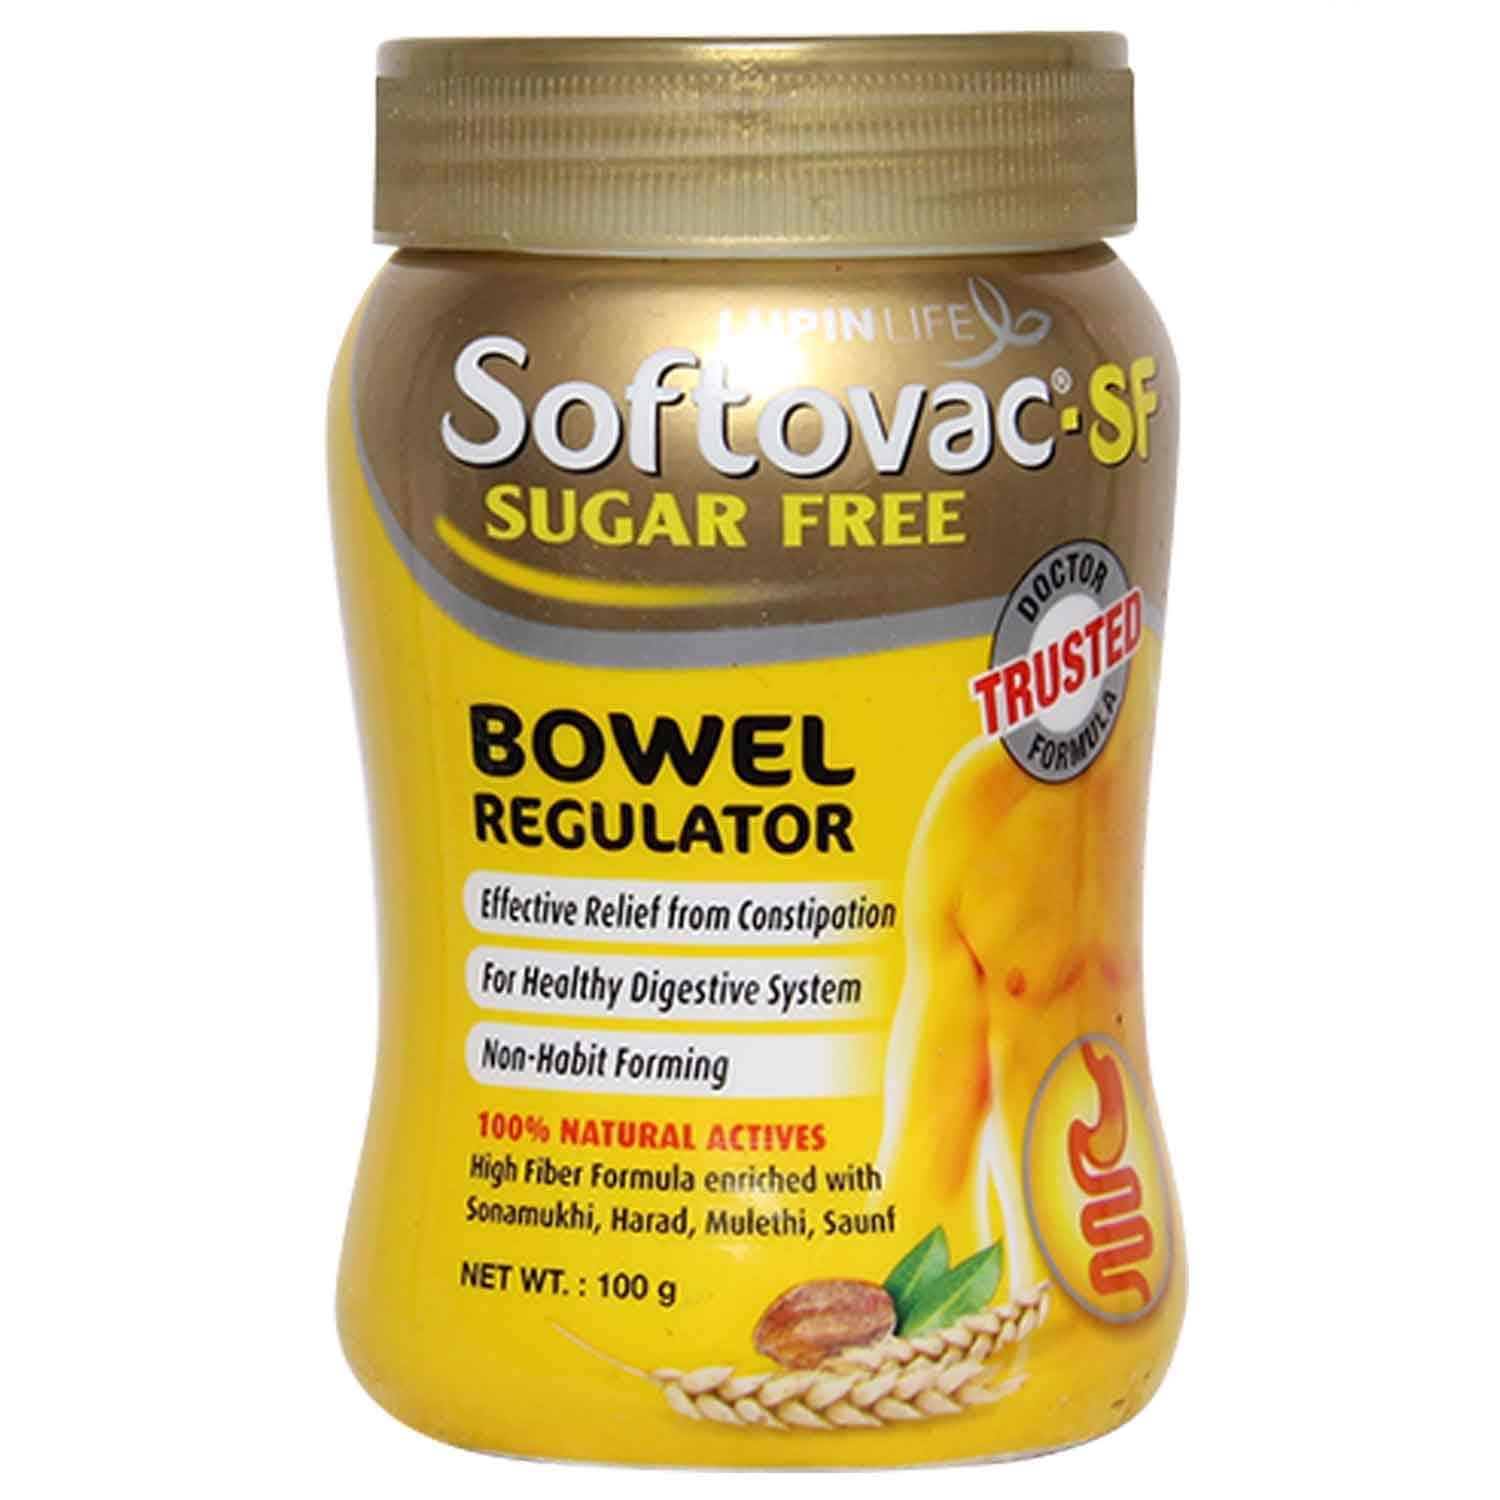 Softovac-SF Bowel Regulator Powder 100 gm